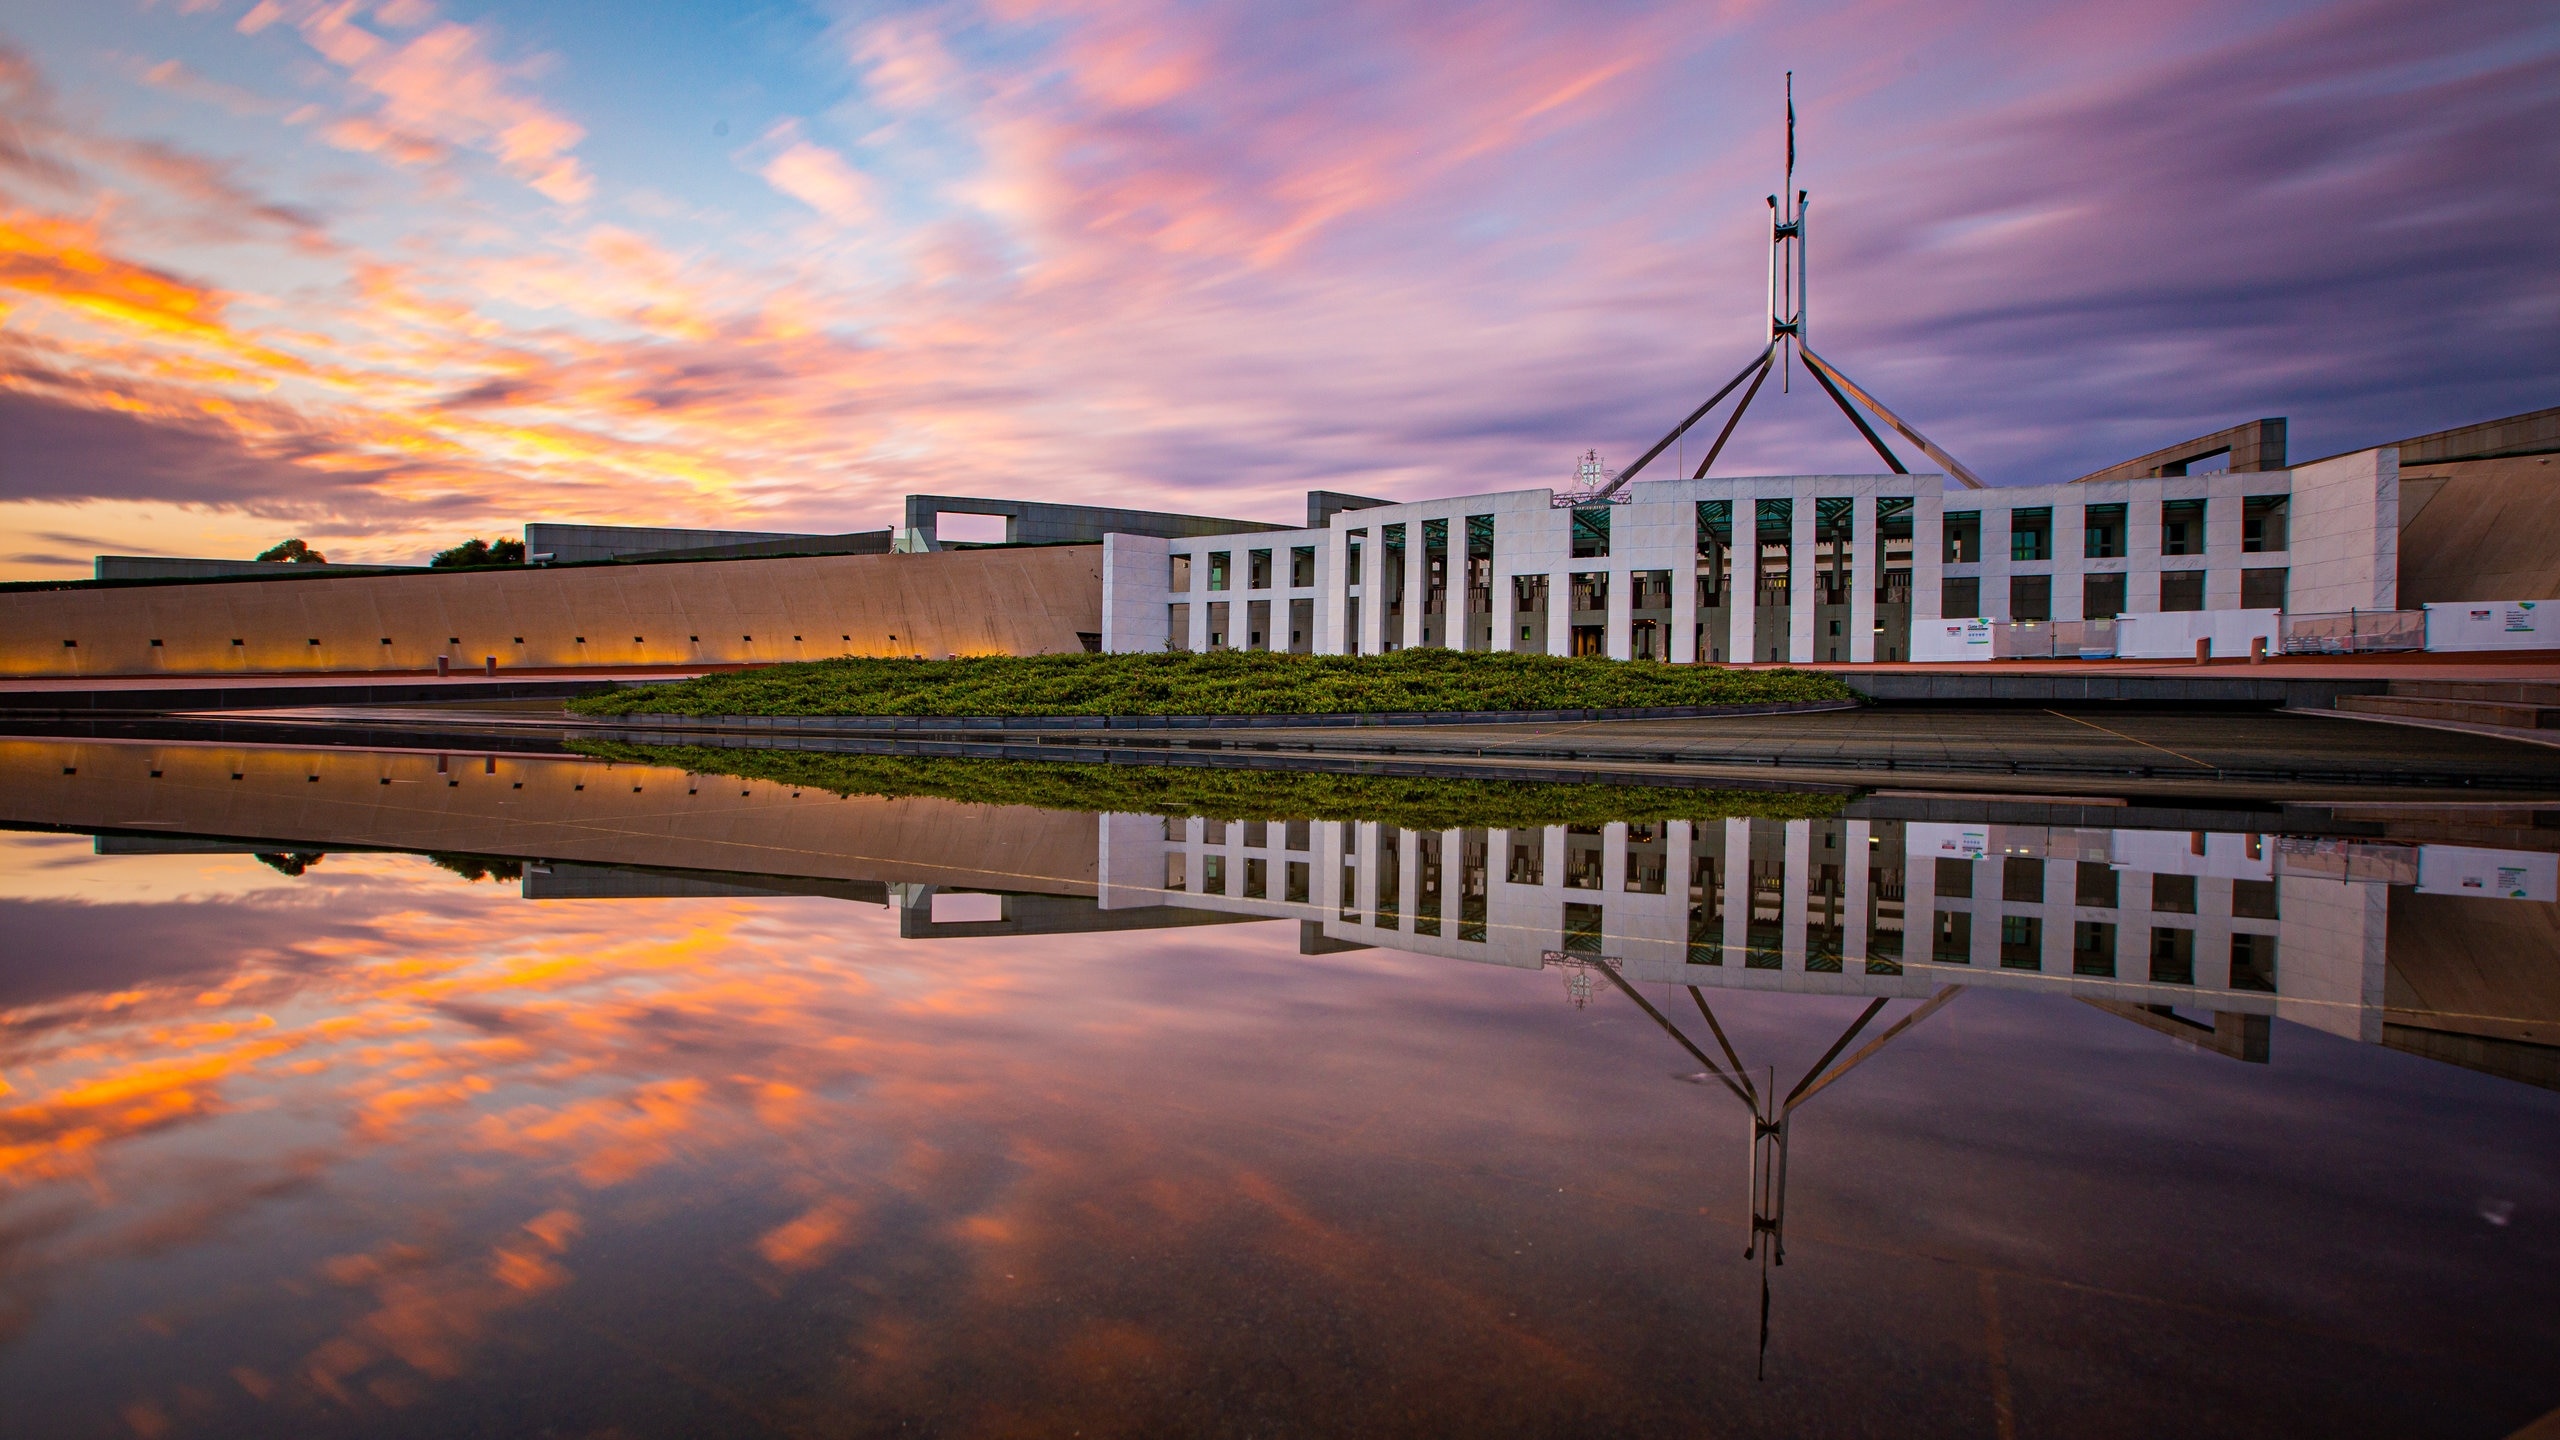 Canberra, Visit guide, Travel inspiration, Australian capital beauty, 2560x1440 HD Desktop